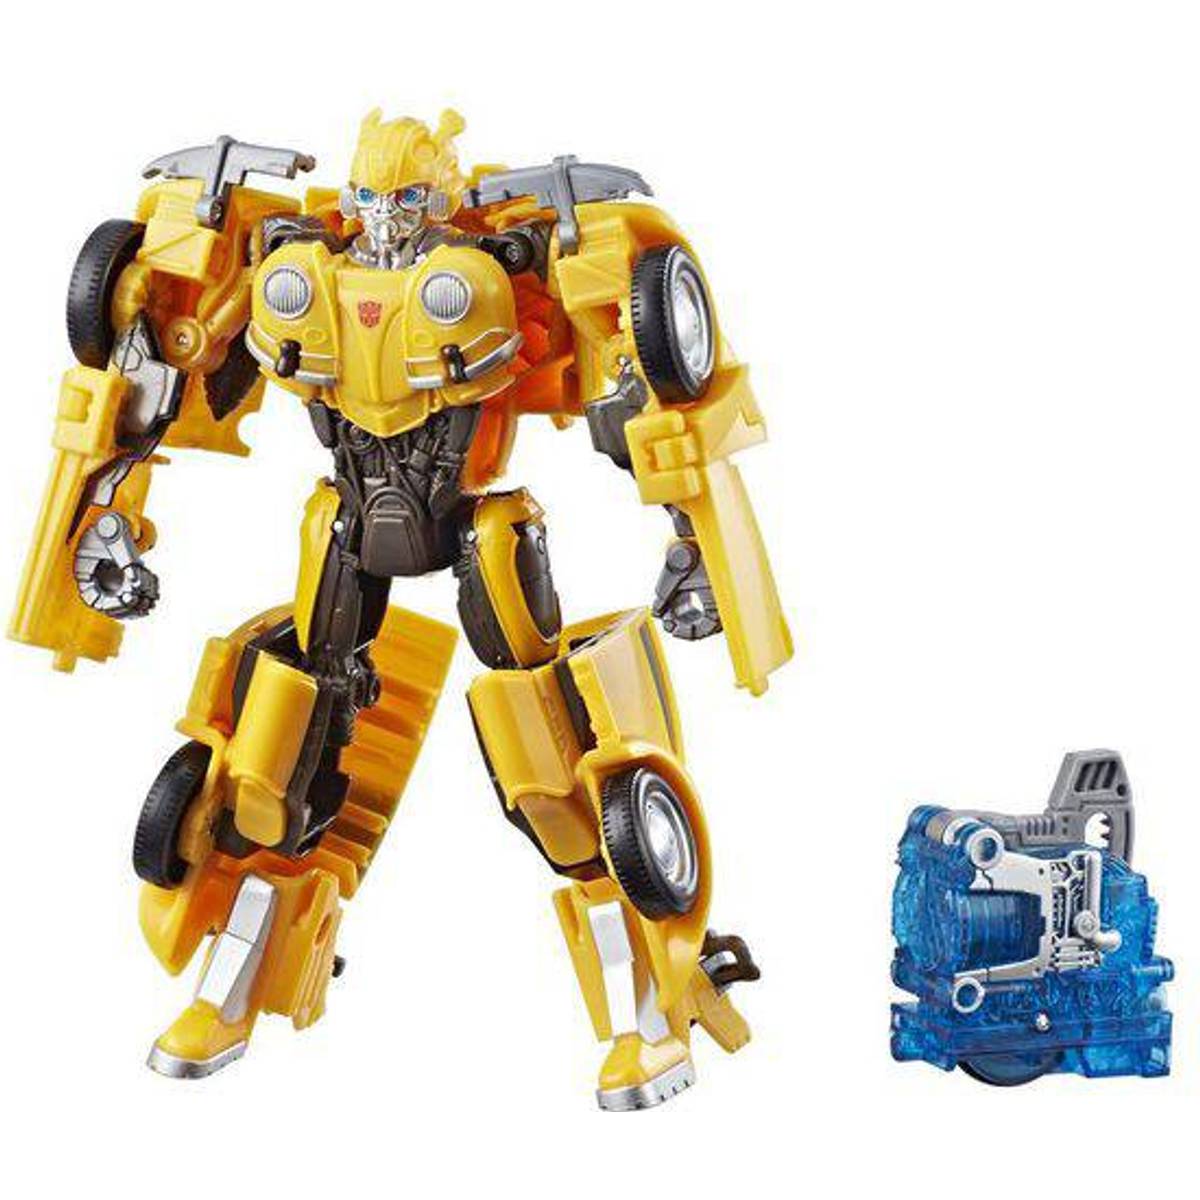 Bumblebee transformers • Find den billigste pris hos PriceRunner nu »